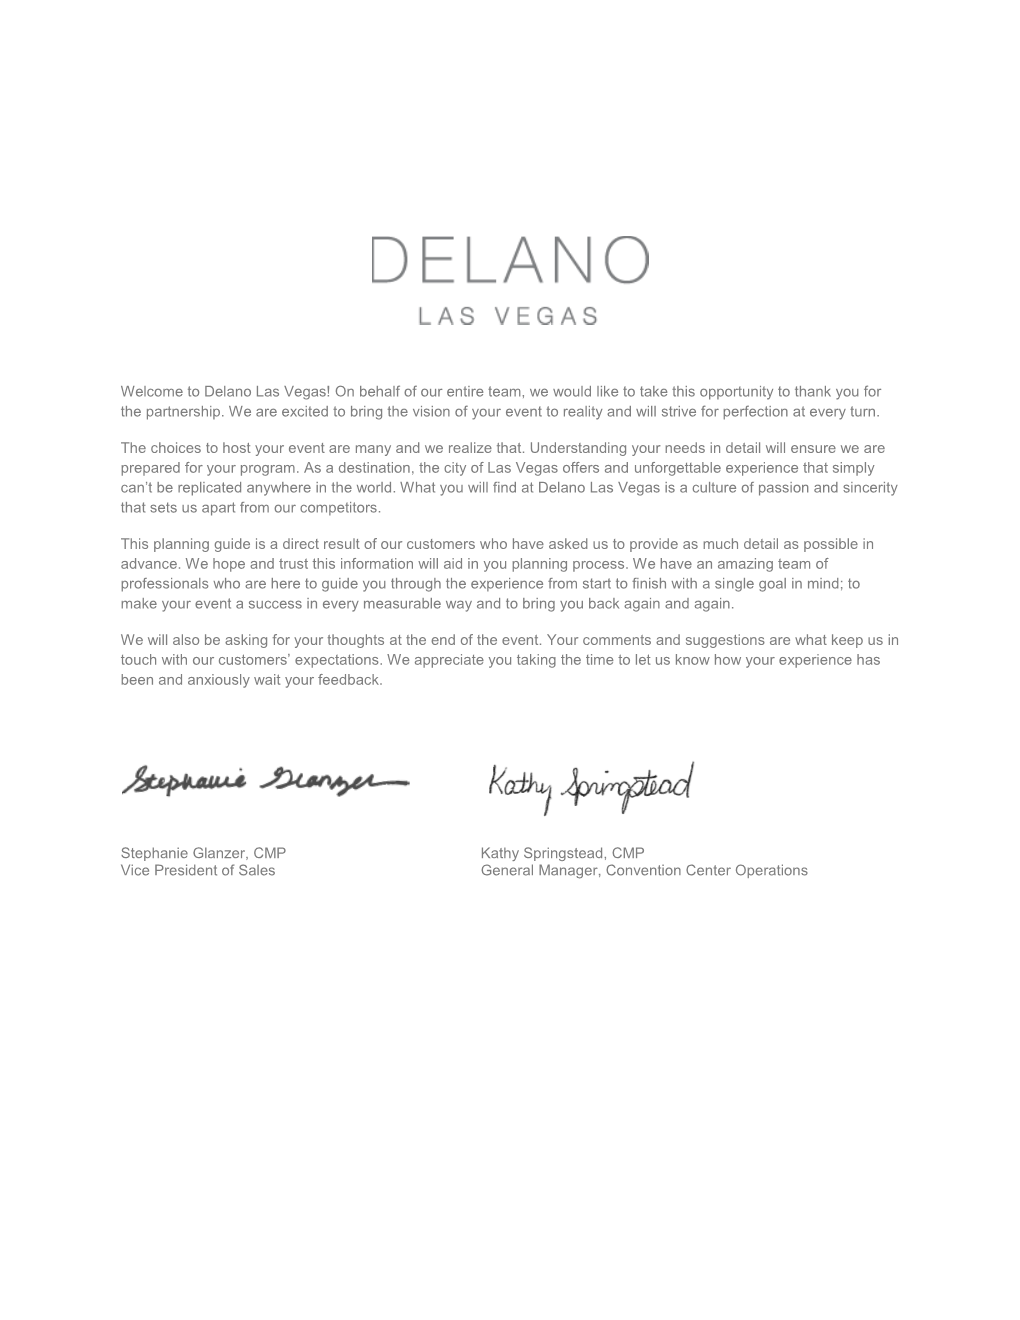 Delano Las Vegas Planning Guide